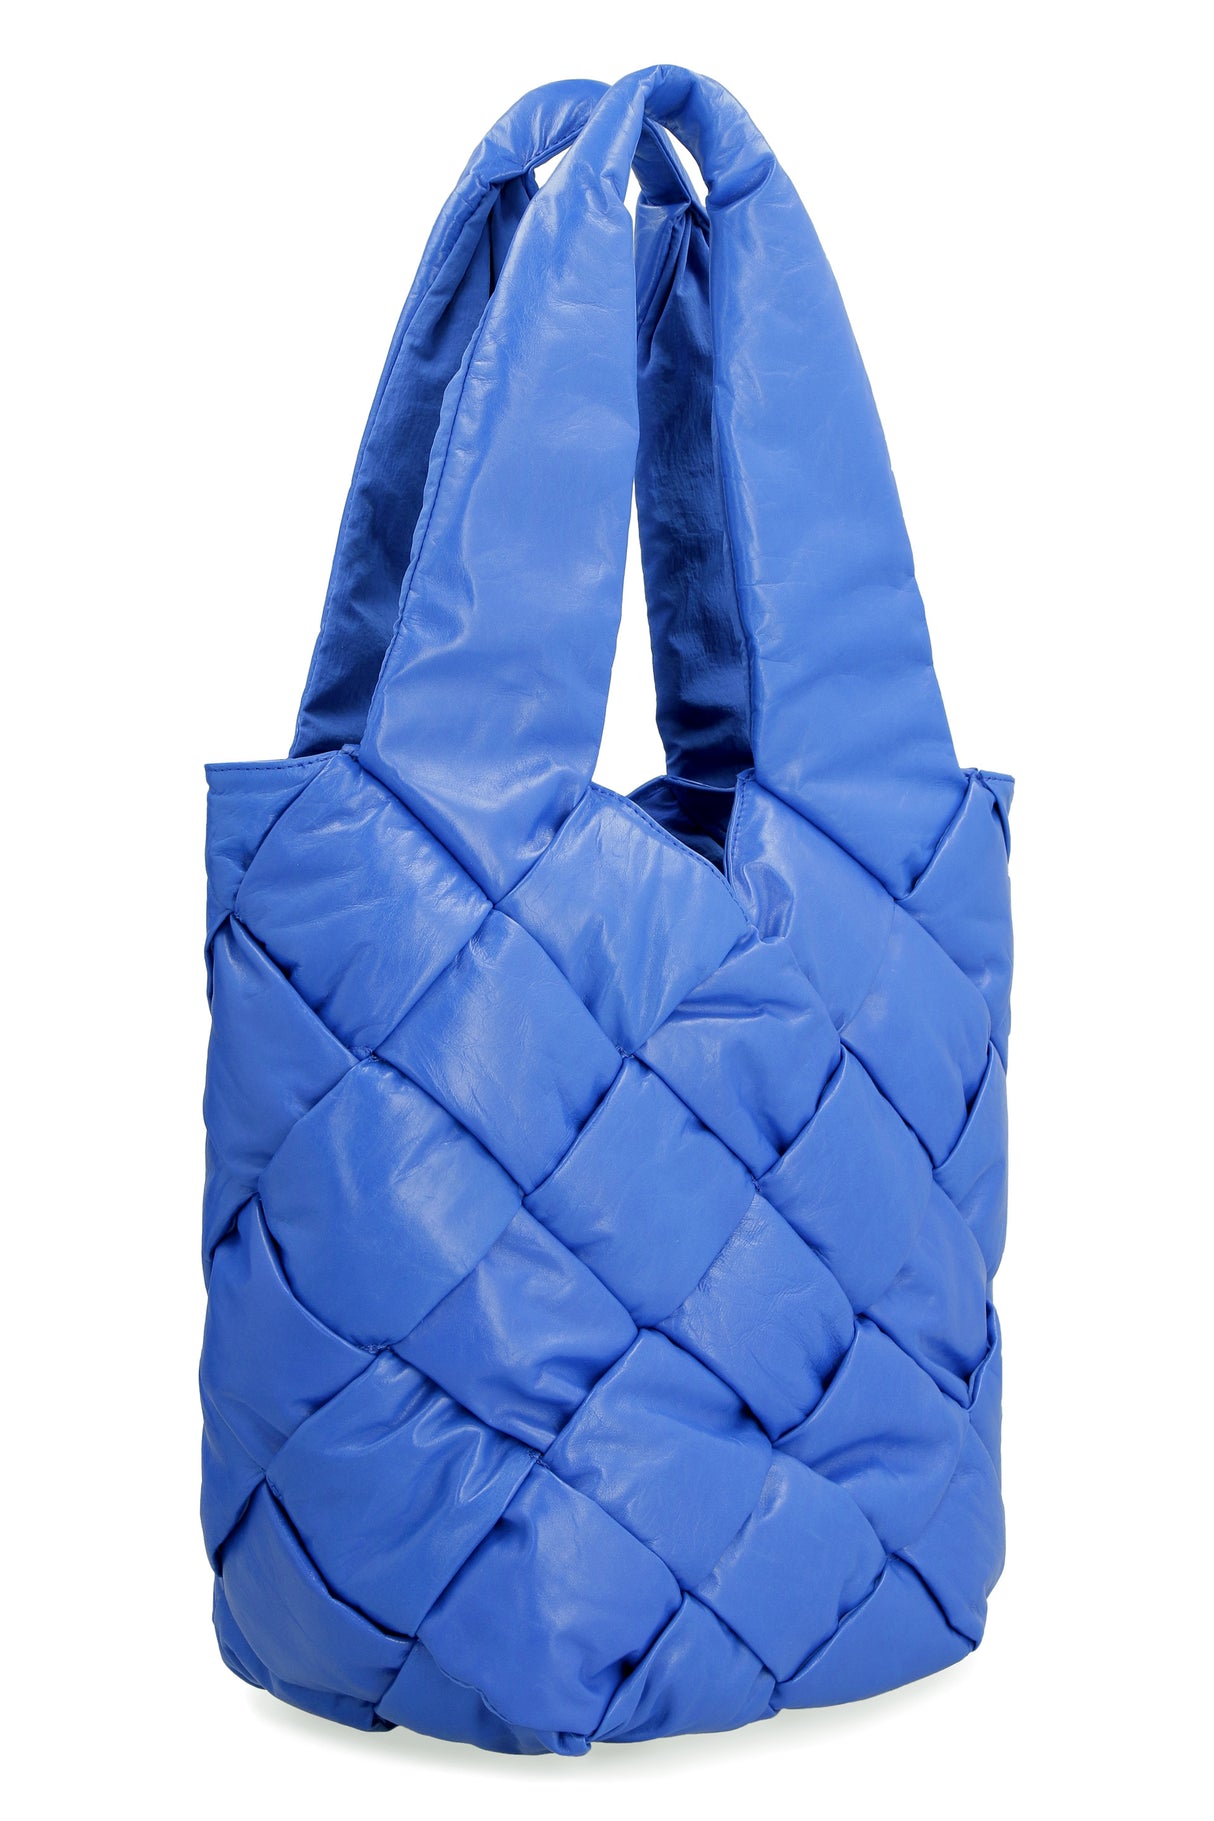 BOTTEGA VENETA Classic Blue Leather Tote Handbag for Men